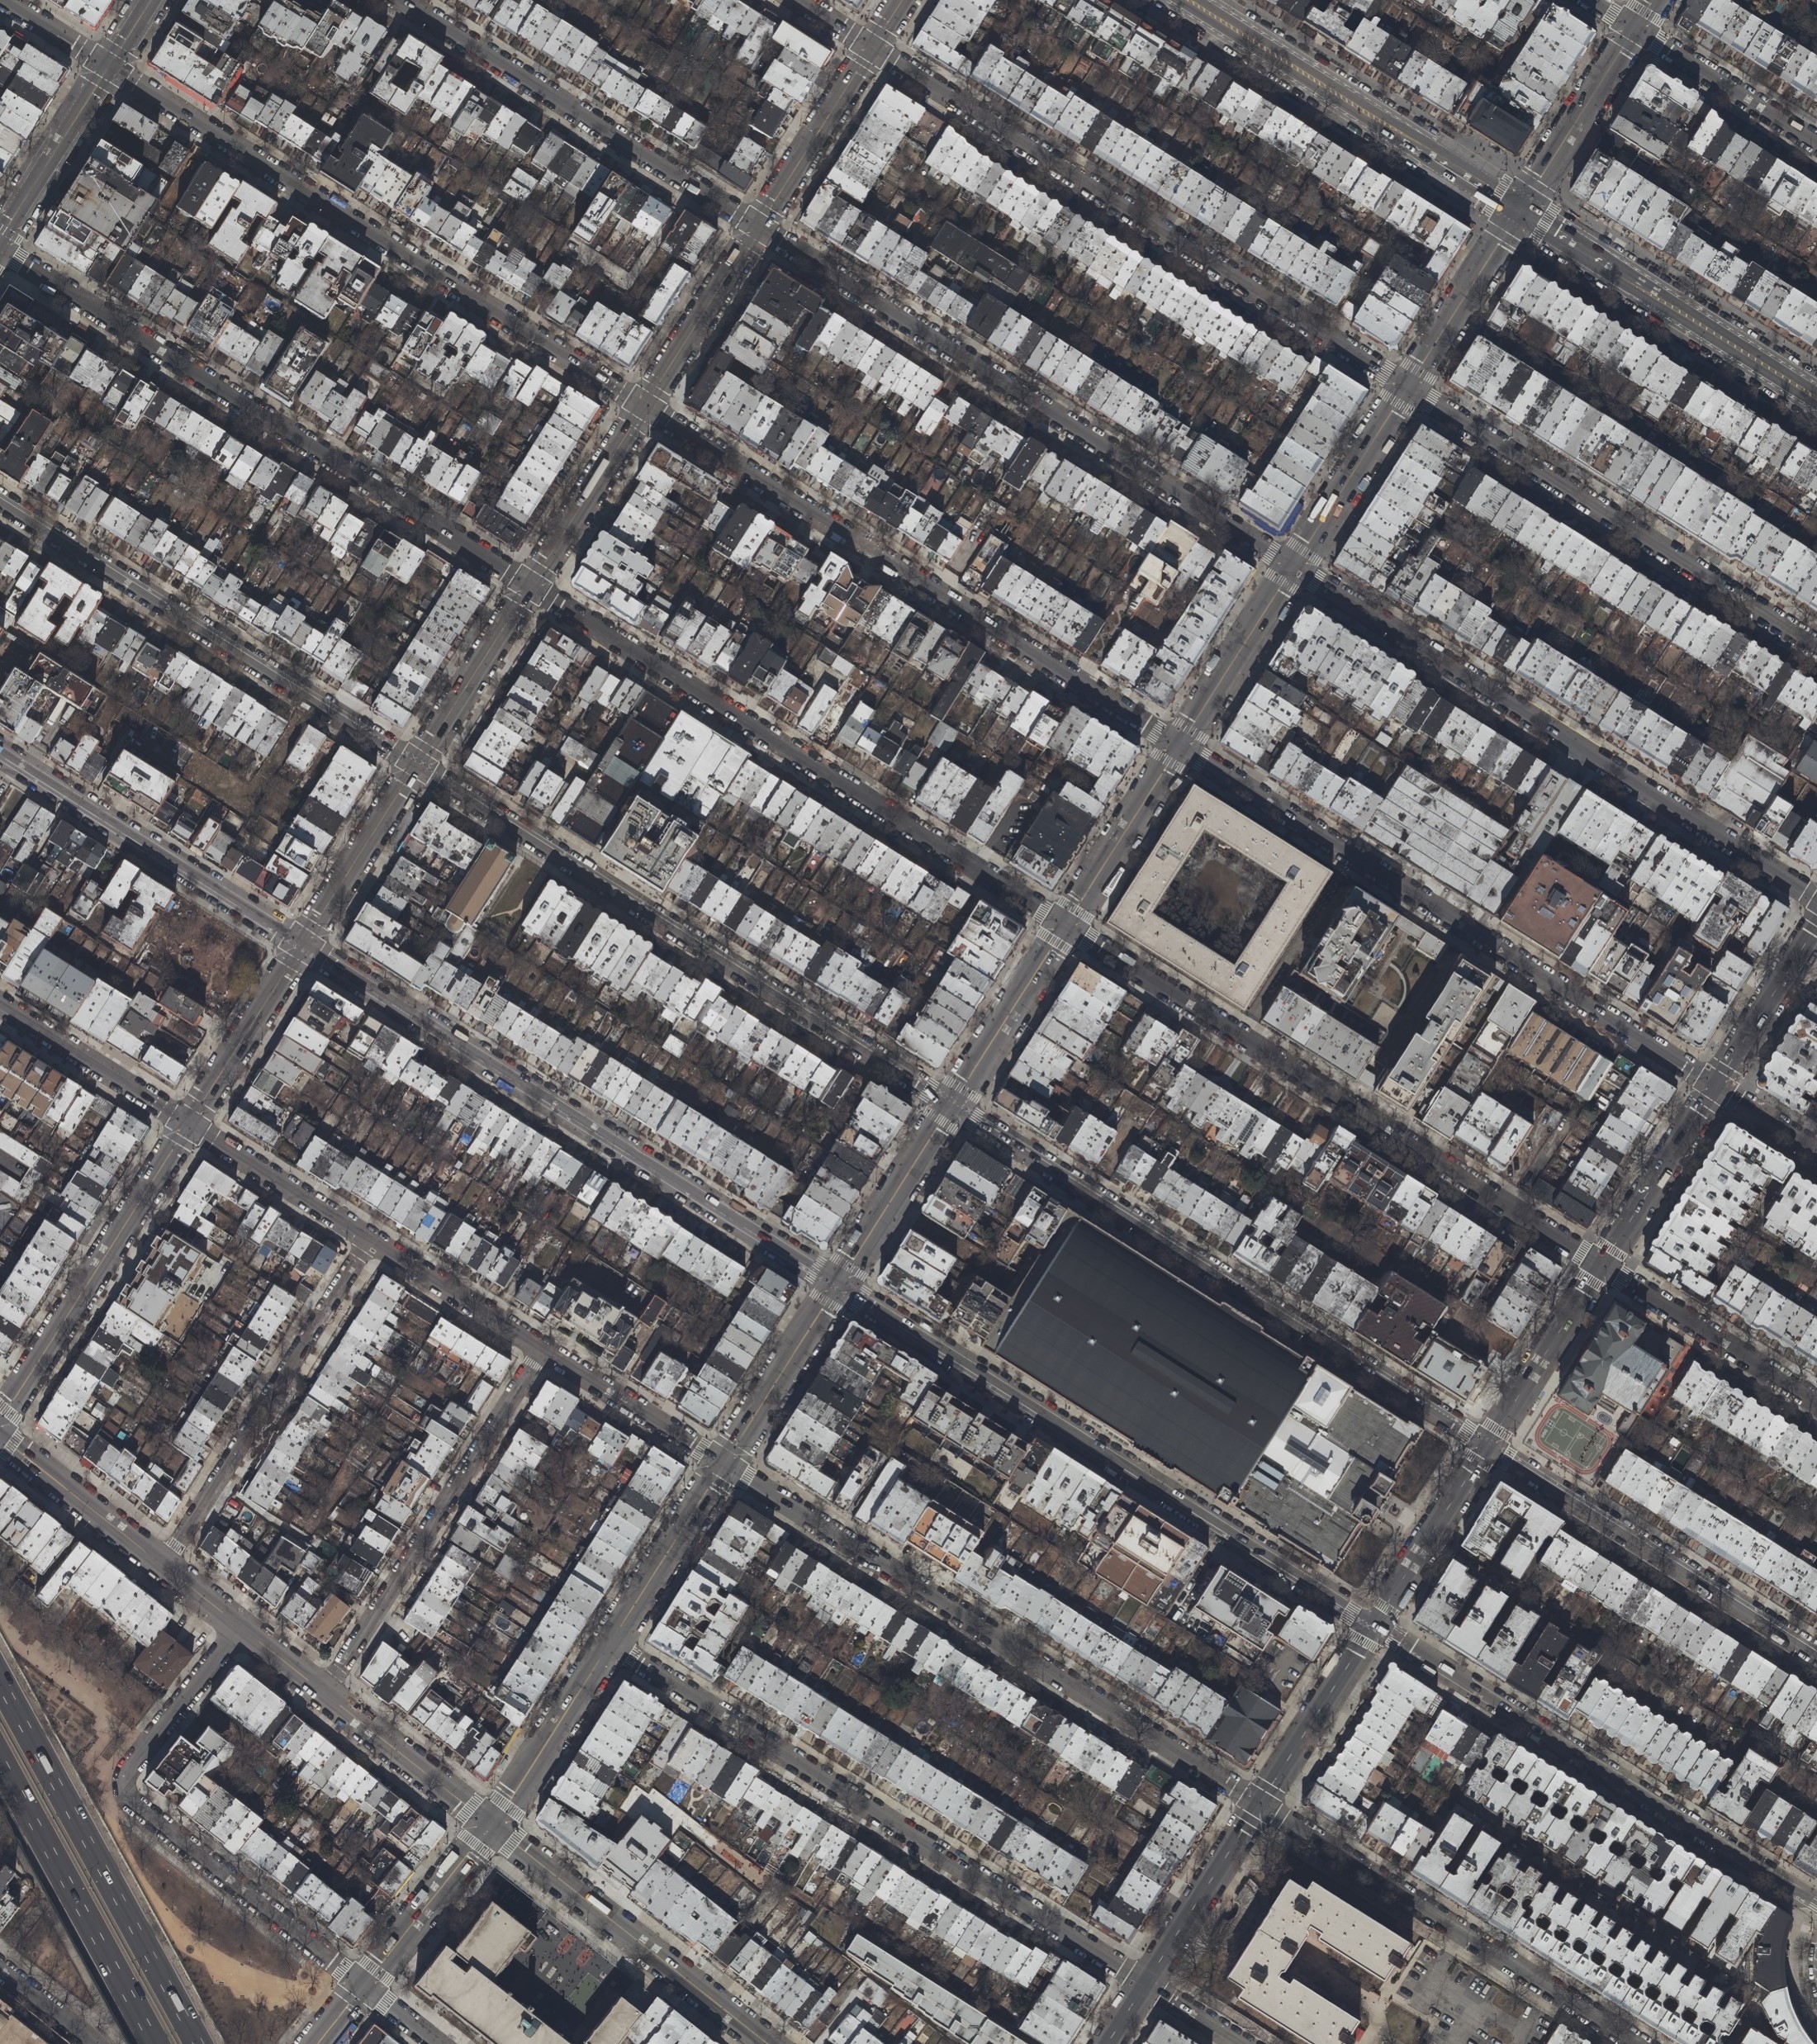 Satellite image of Park Slope in Brooklyn, NYC